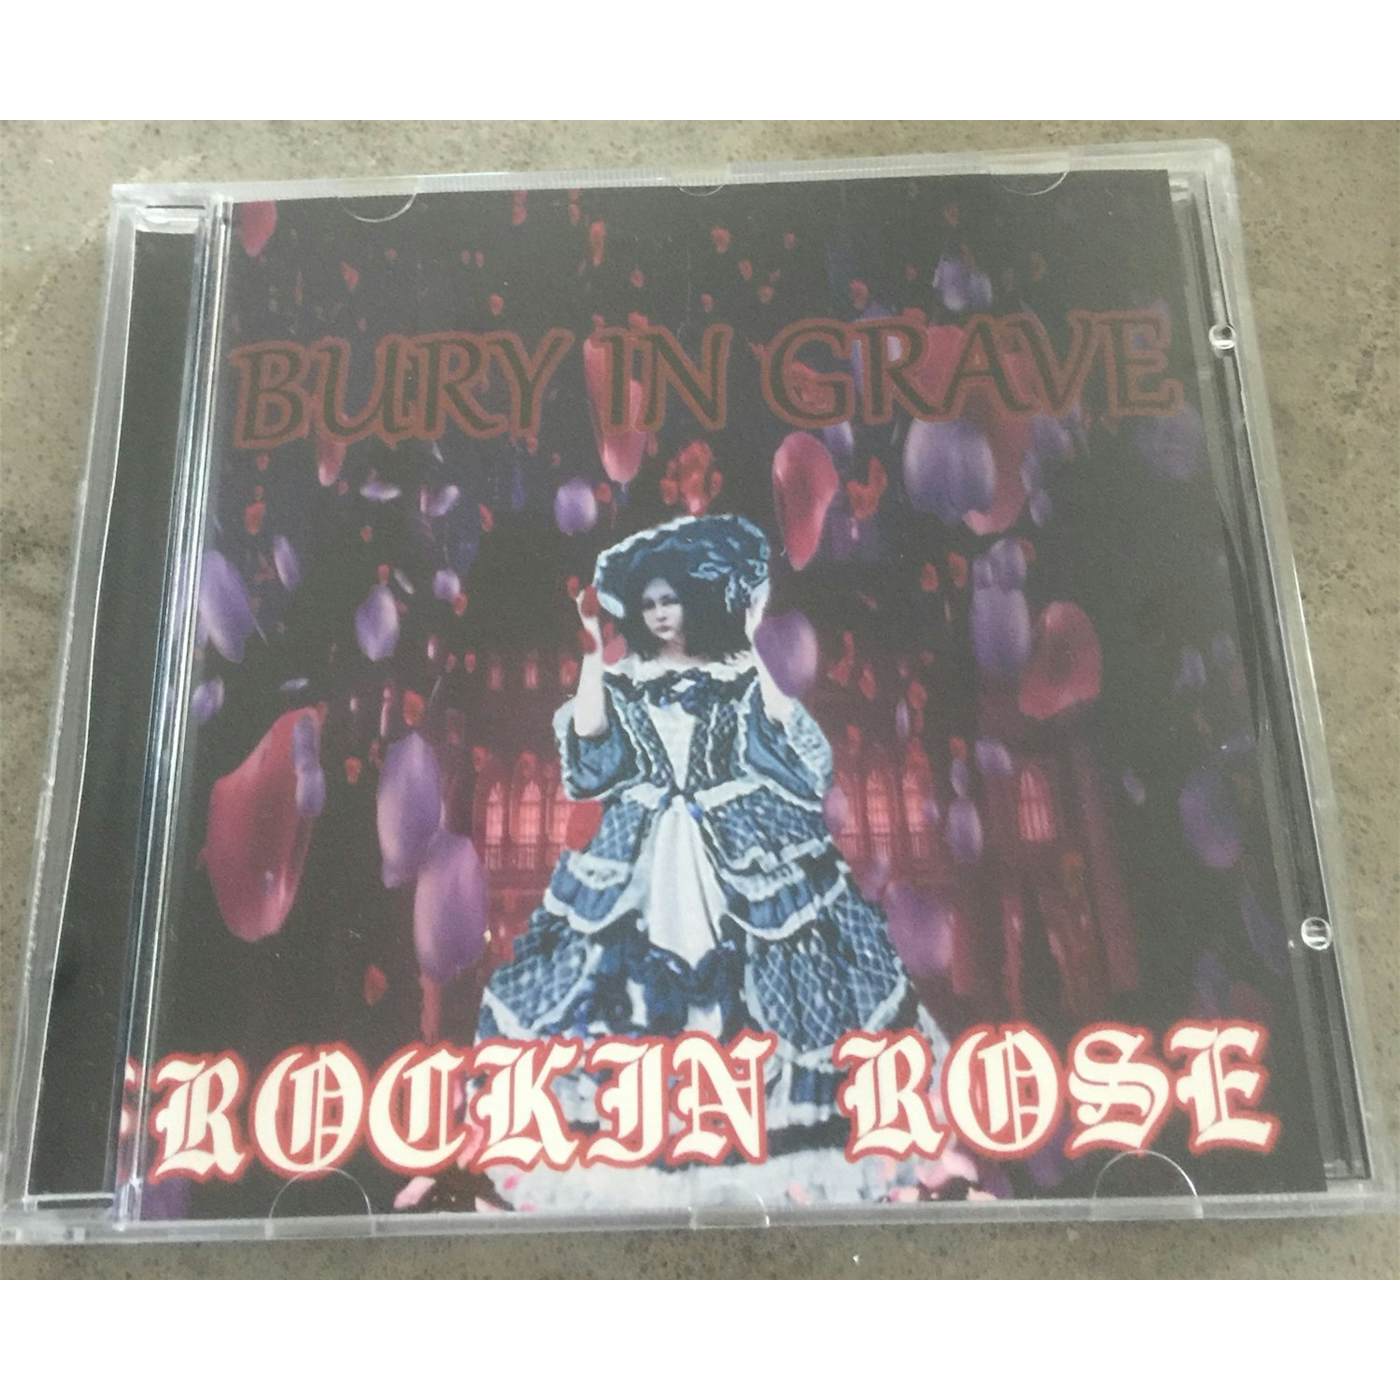 Rockin Rose Bury In Grave CD